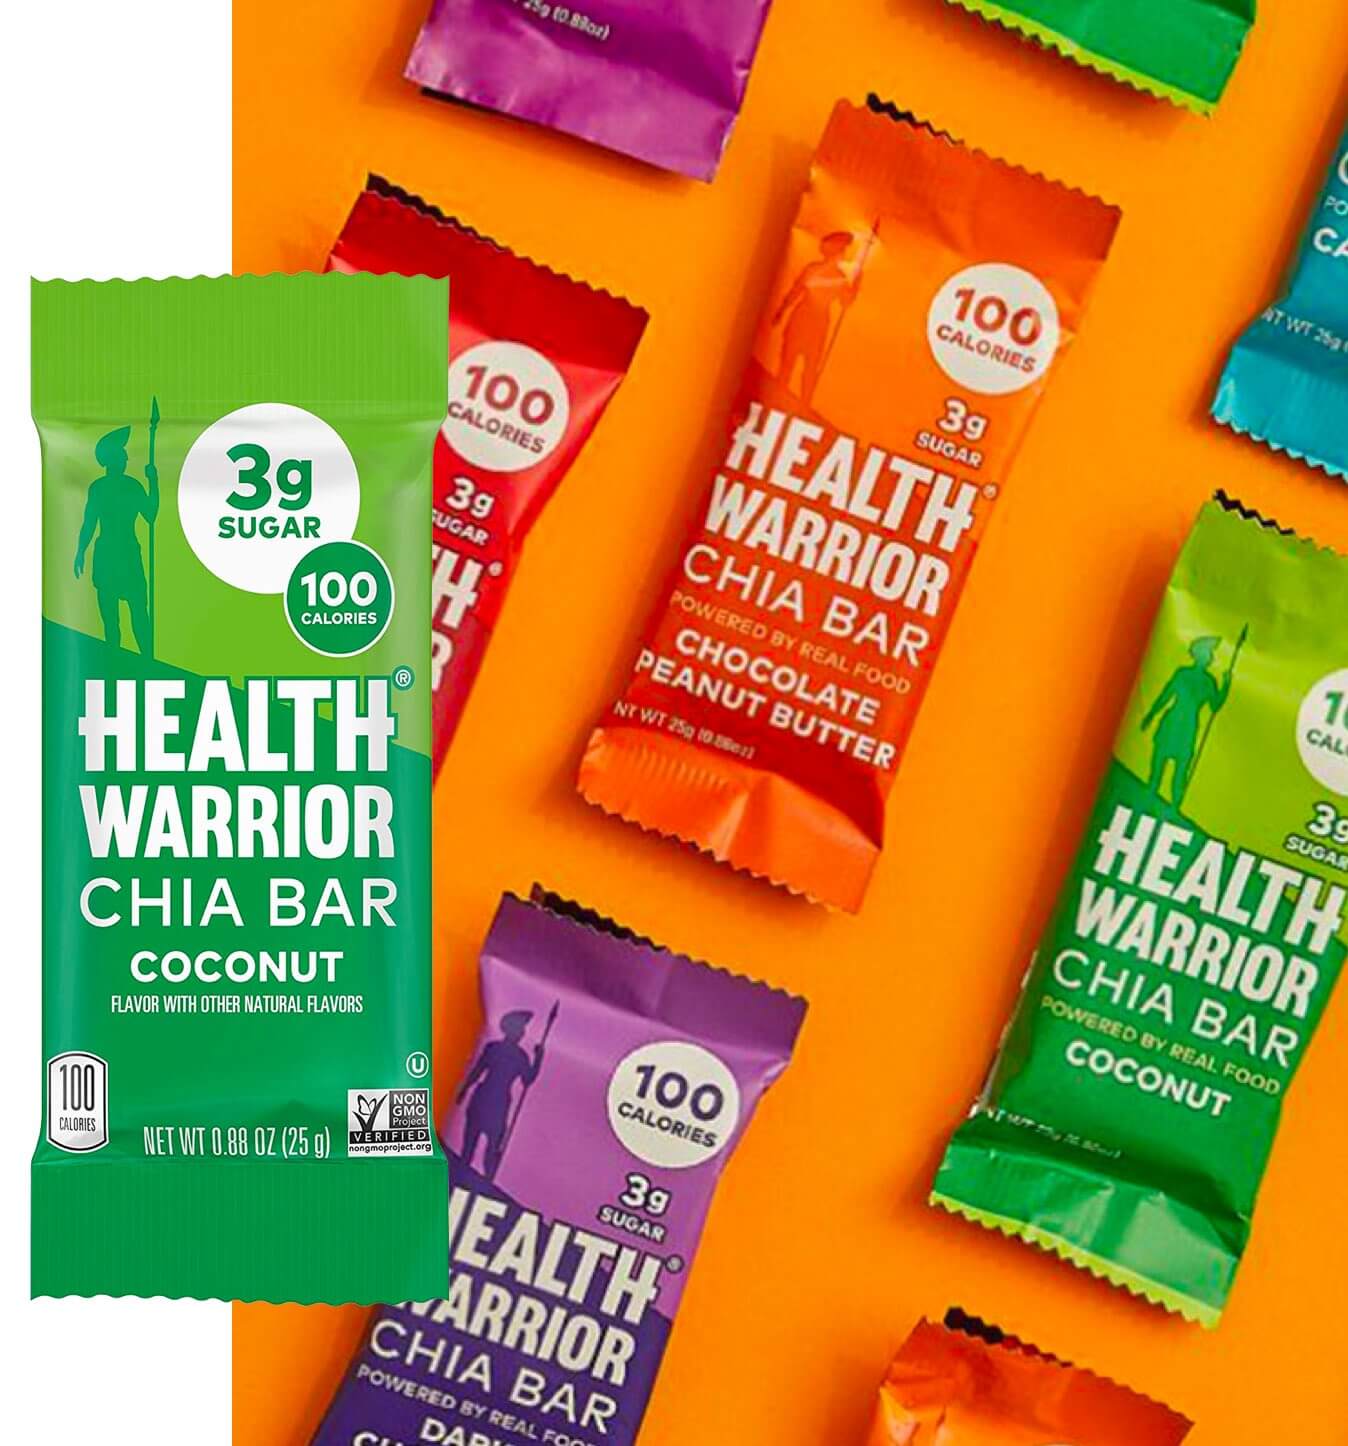 Health Warrior packaging